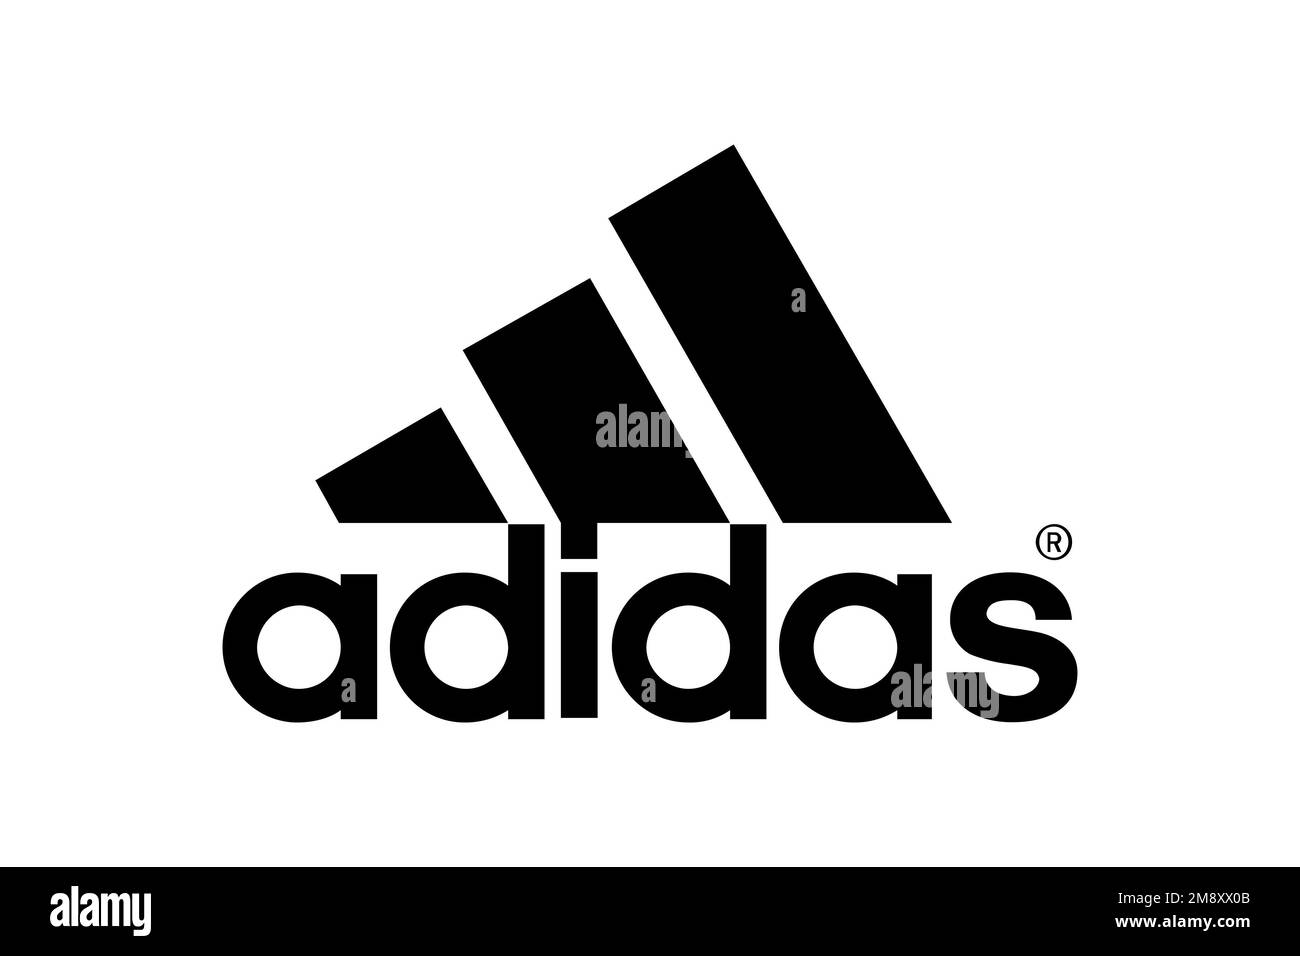 Adidas Black and White Stock Photos & Images - Alamy